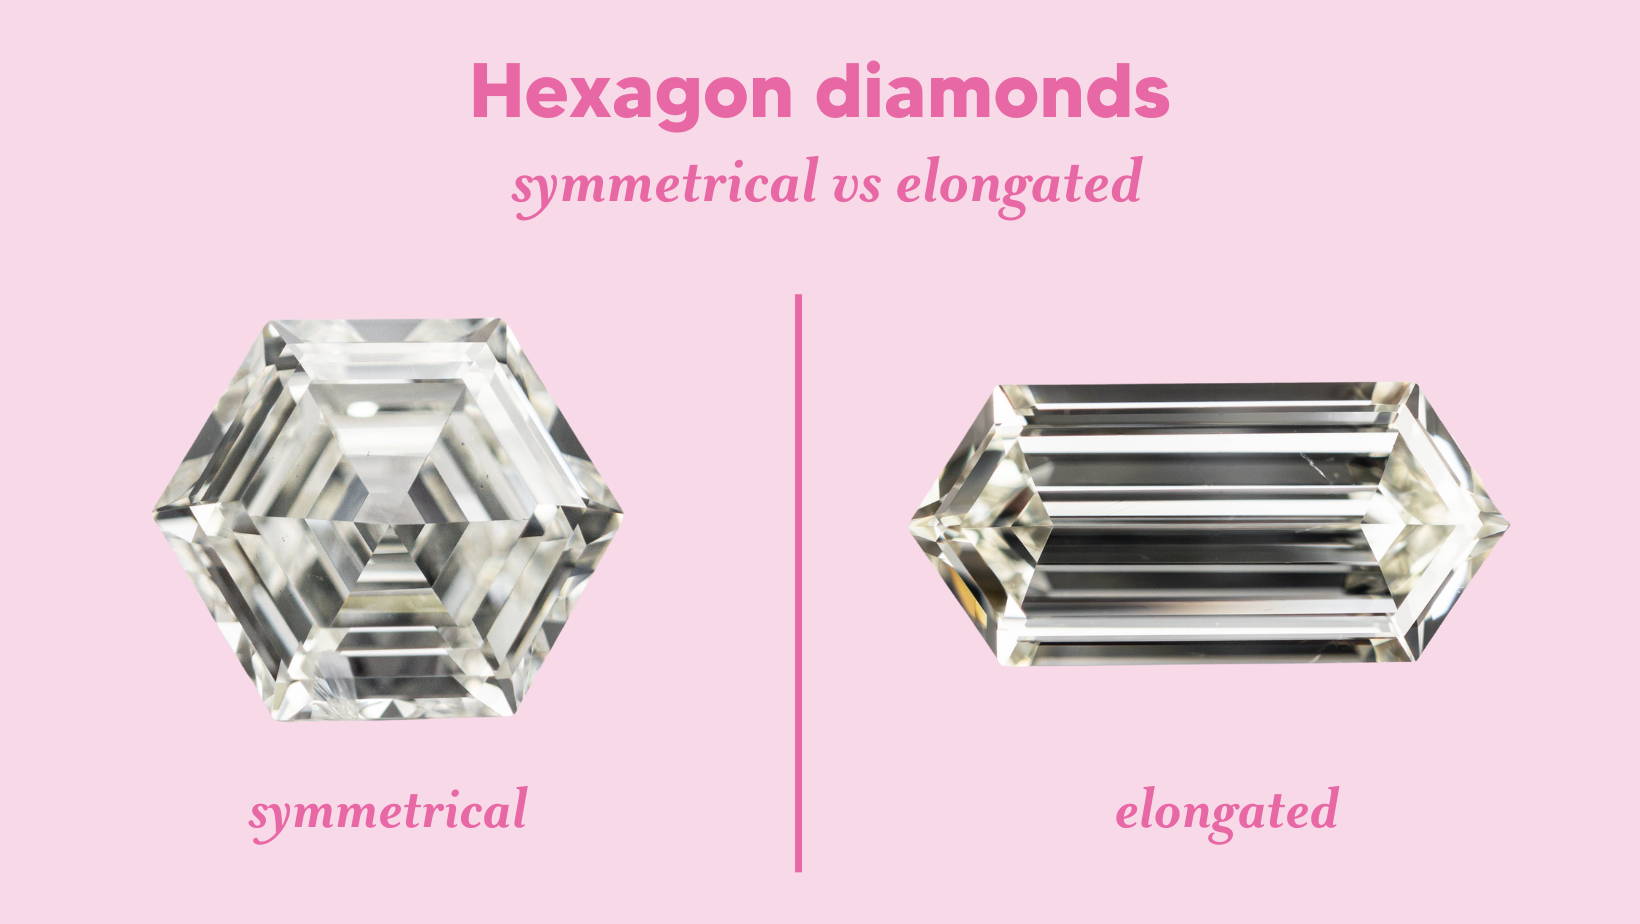 symmetrical vs elongated hexagon diamonds